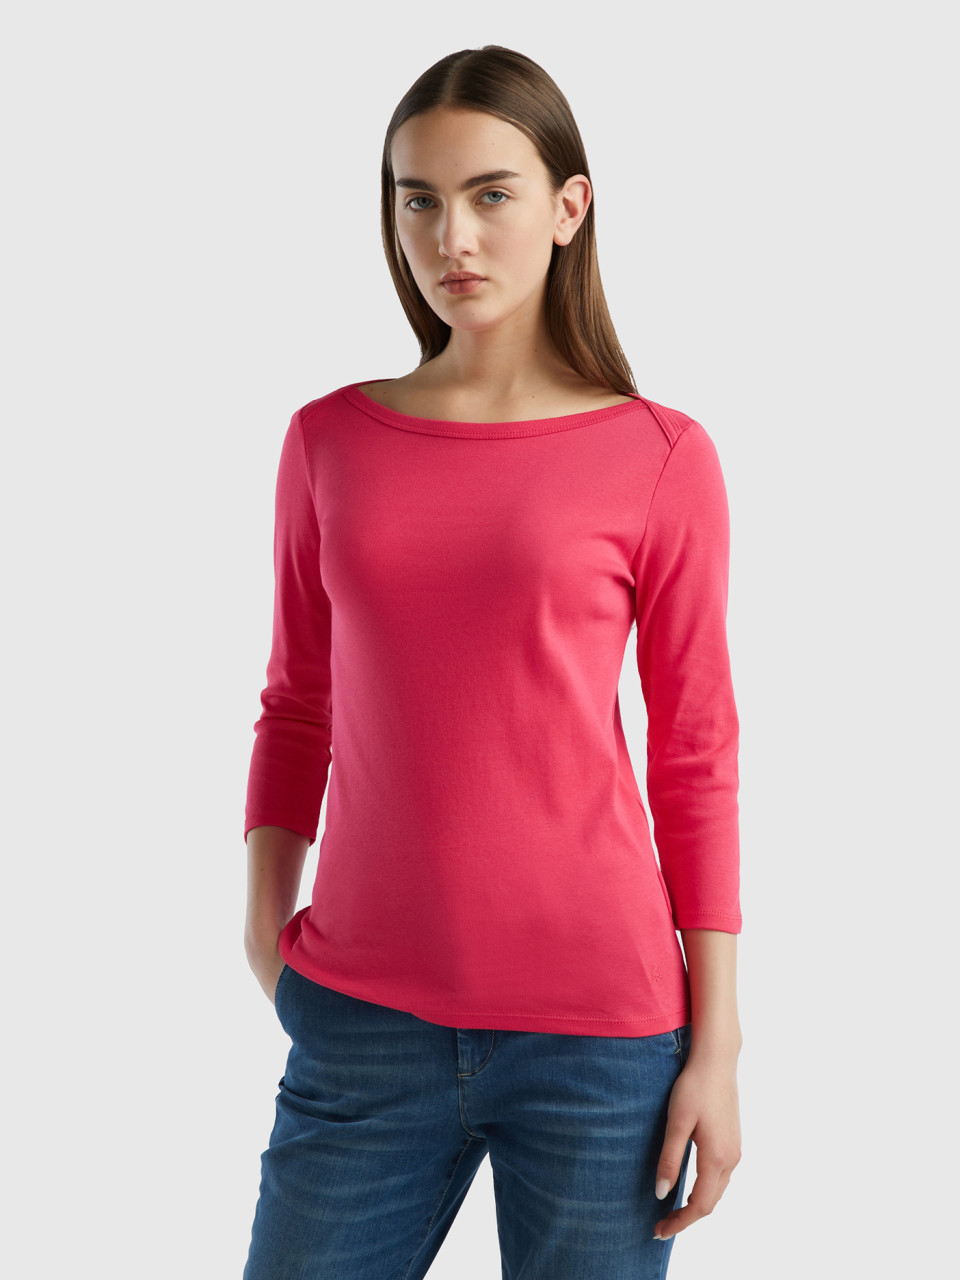 Benetton, T-shirt With Boat Neck In 100% Cotton, Fuchsia, Women